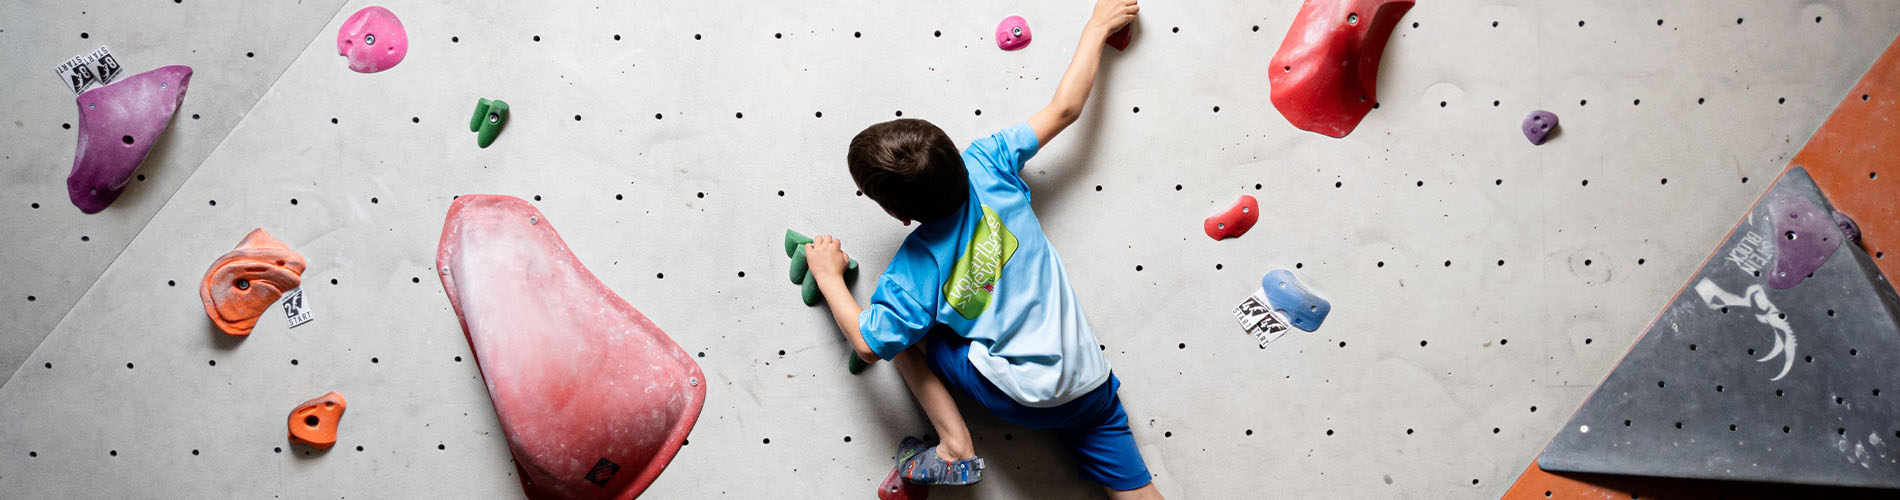 Boy rock climbing or bouldering